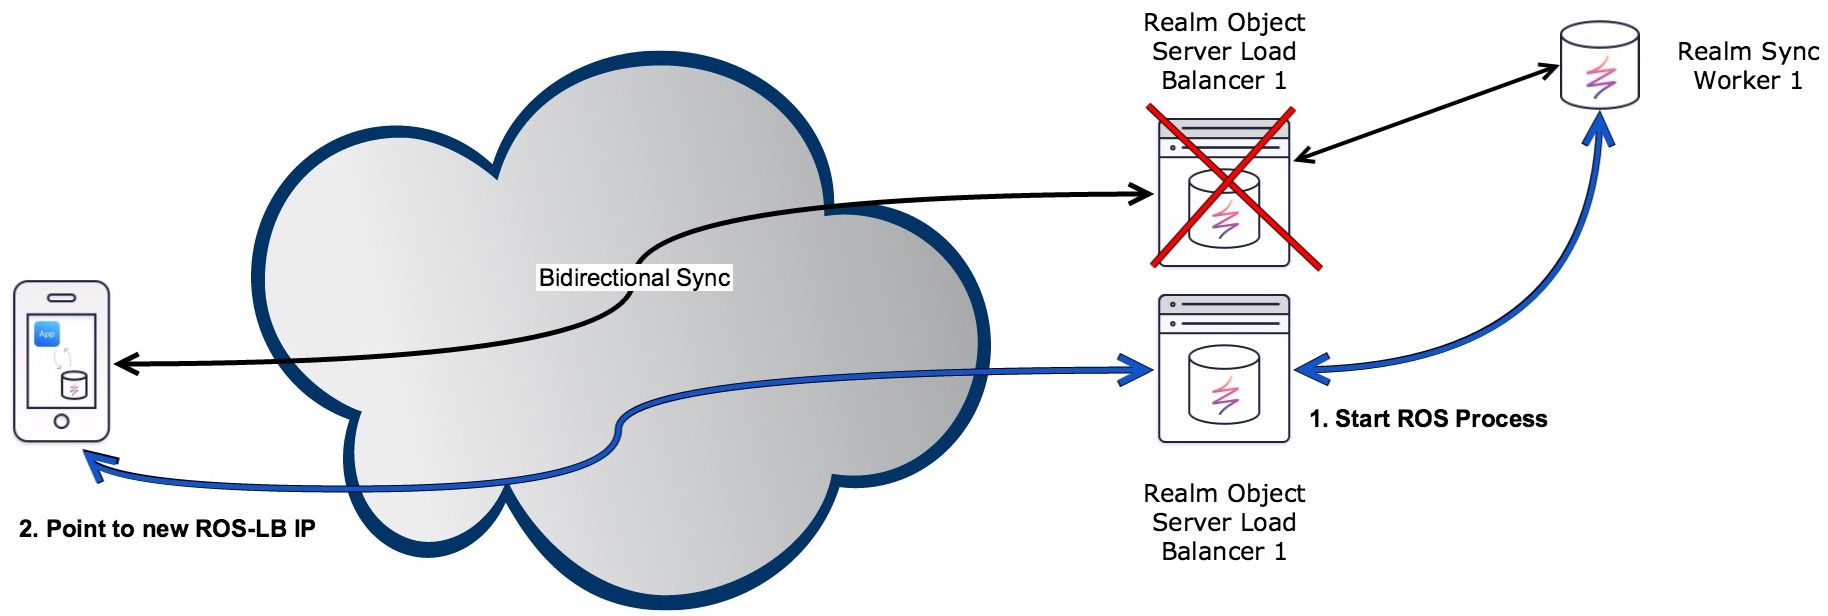 Object Server Failover Diagram